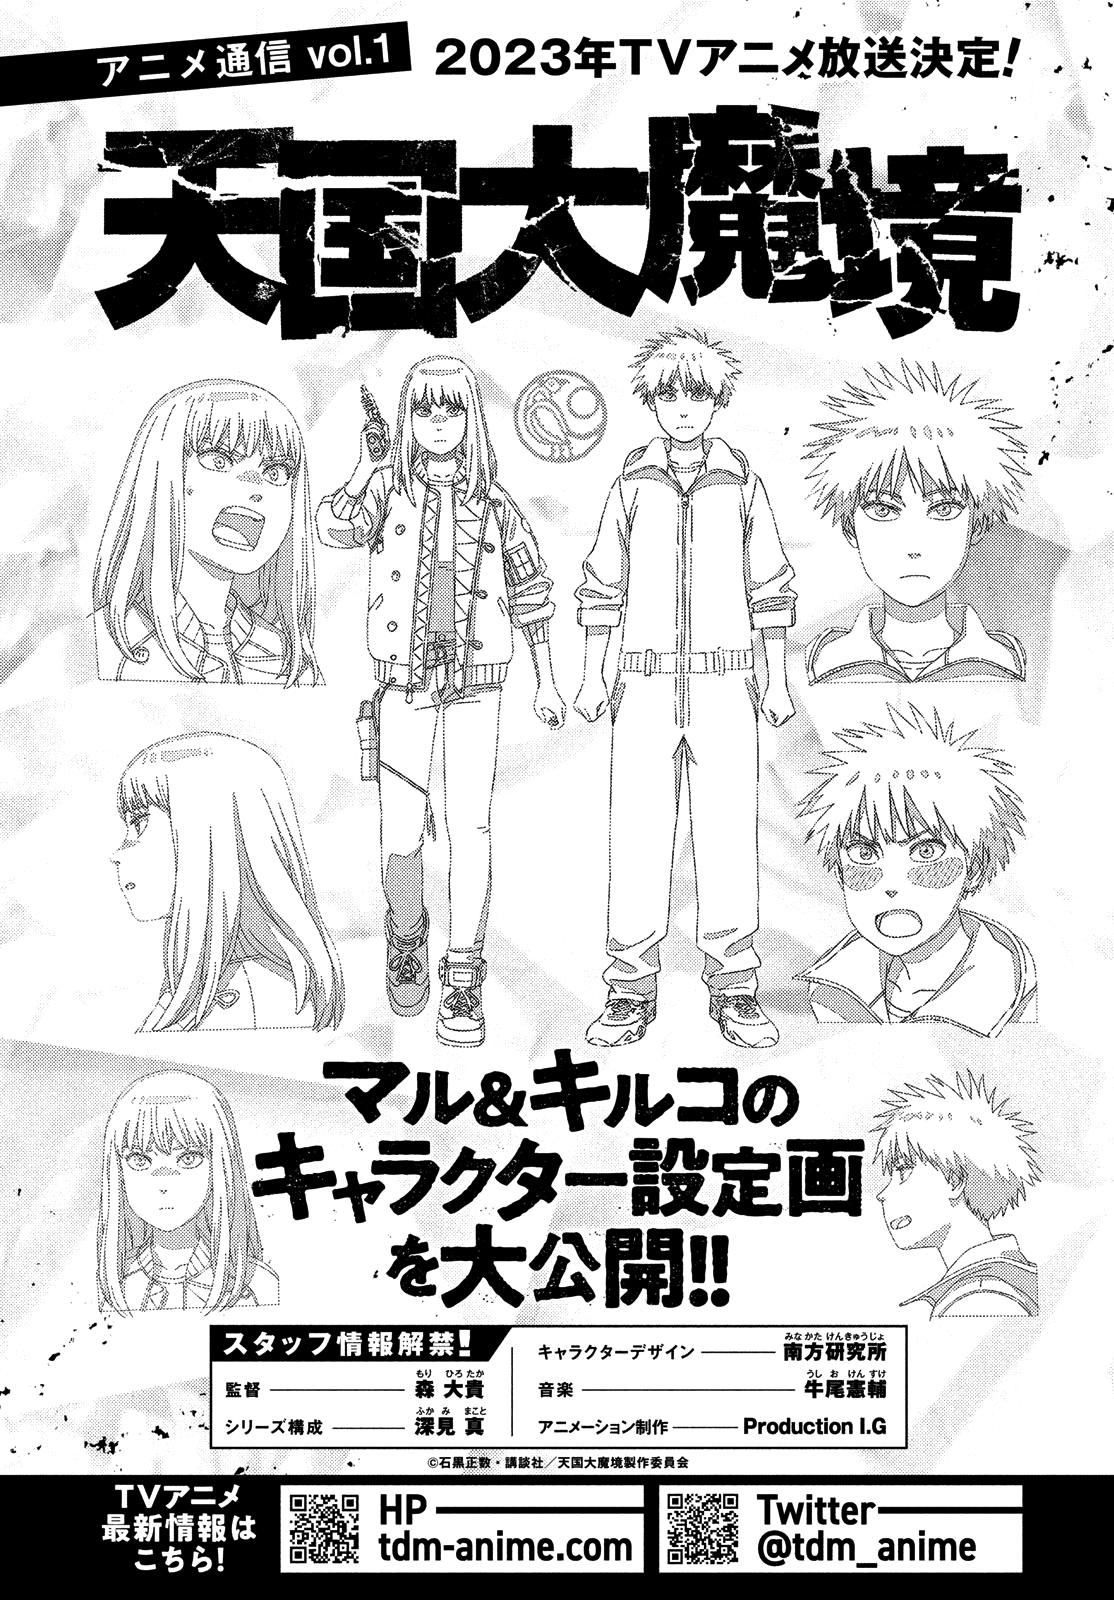 Tengoku Daimakyou Capítulo 14 - Manga Online